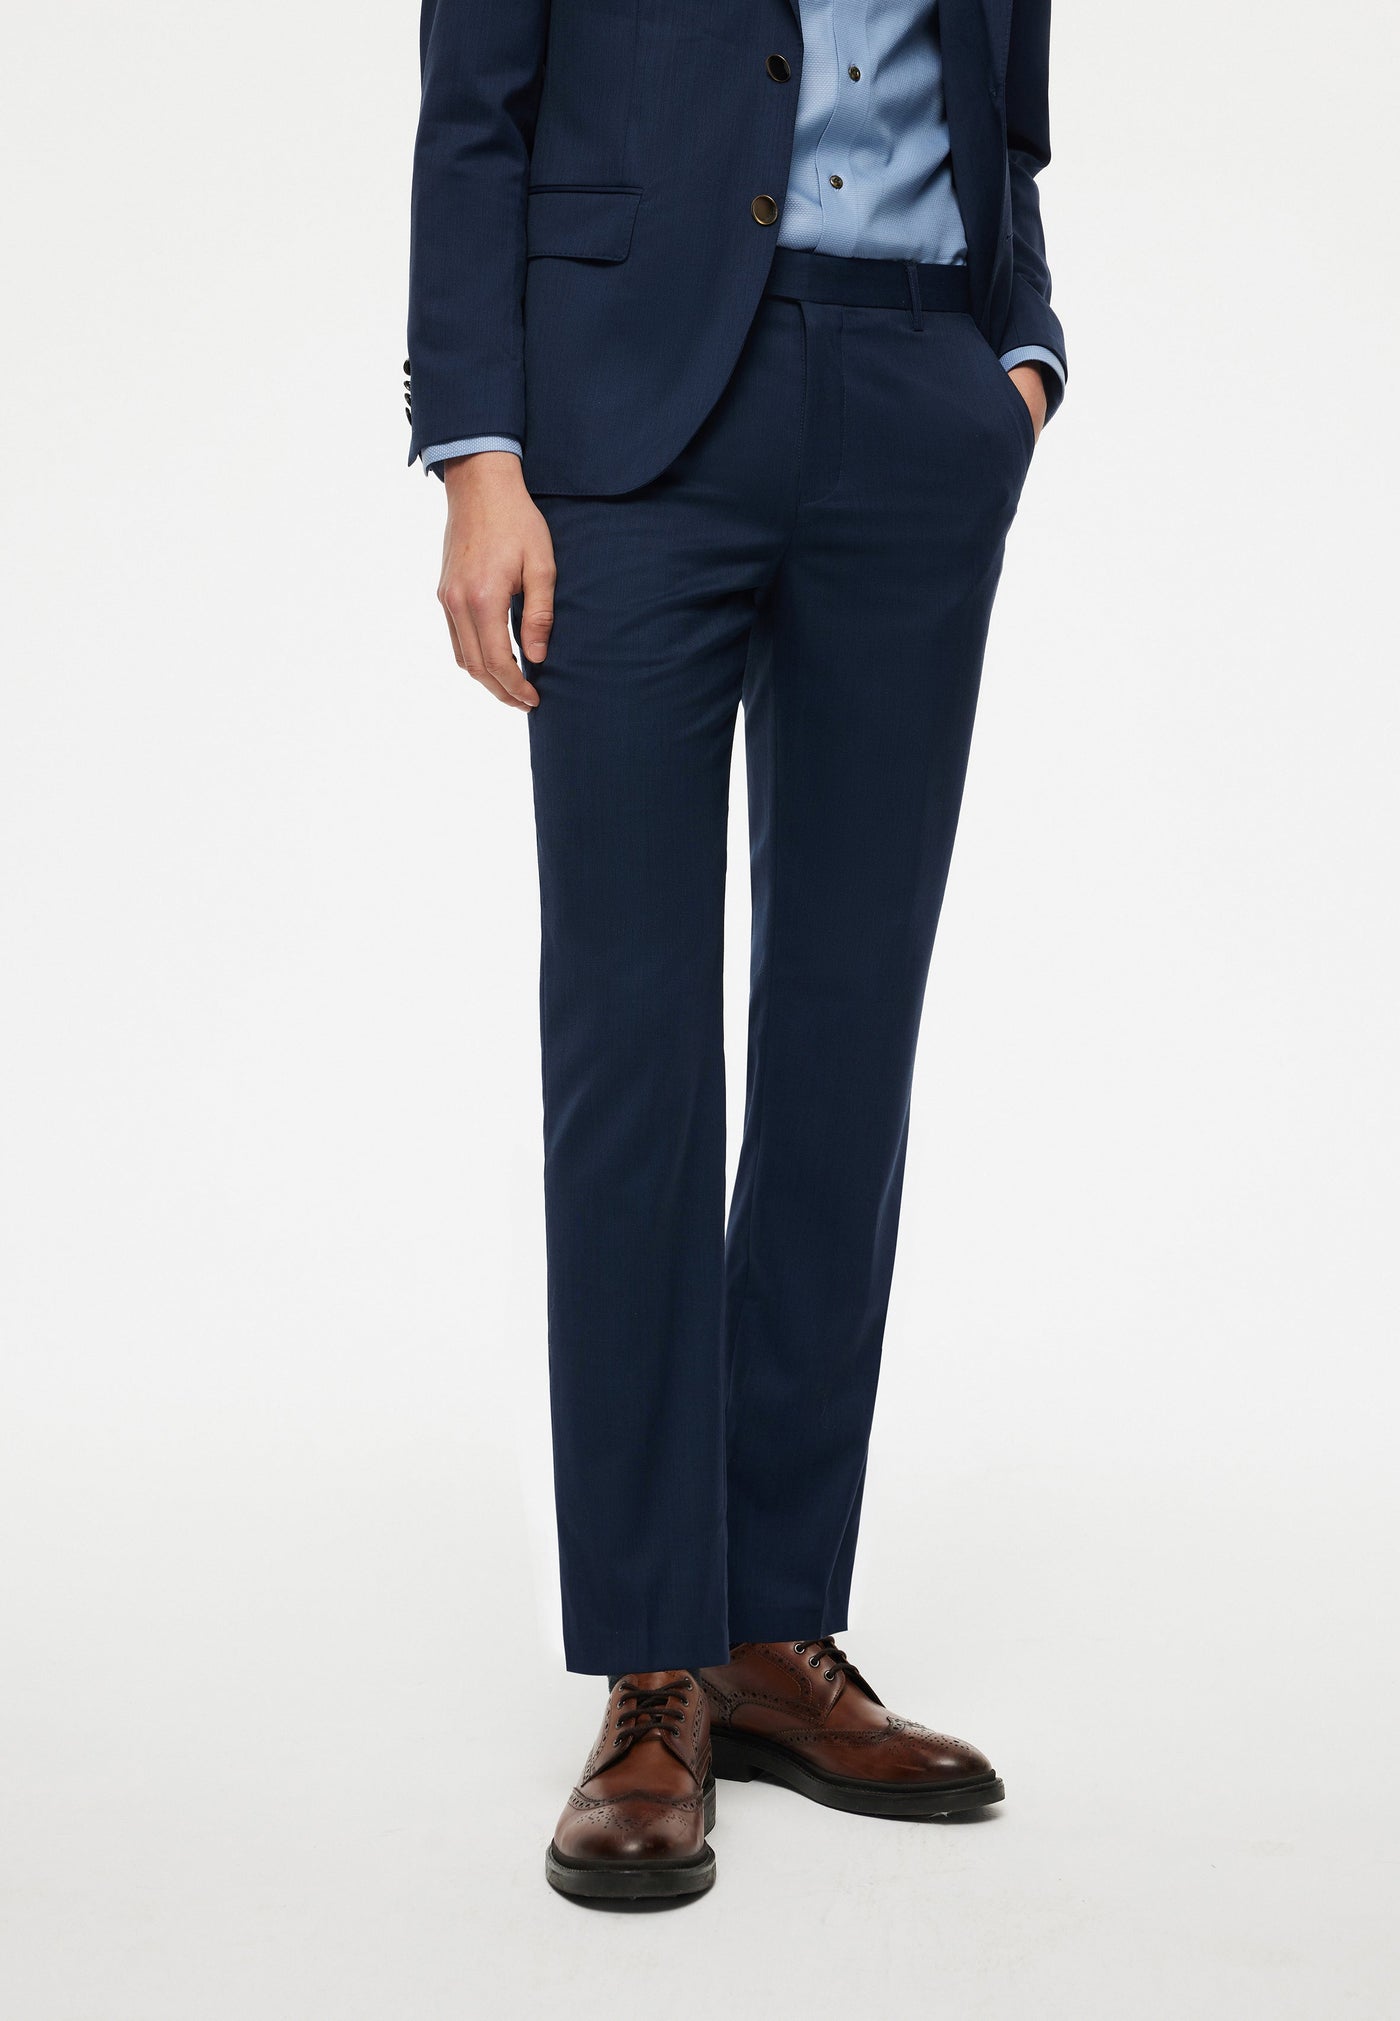 Men Clothing "Blaack" 100% Wool Woven Suit Pants Smart Fit